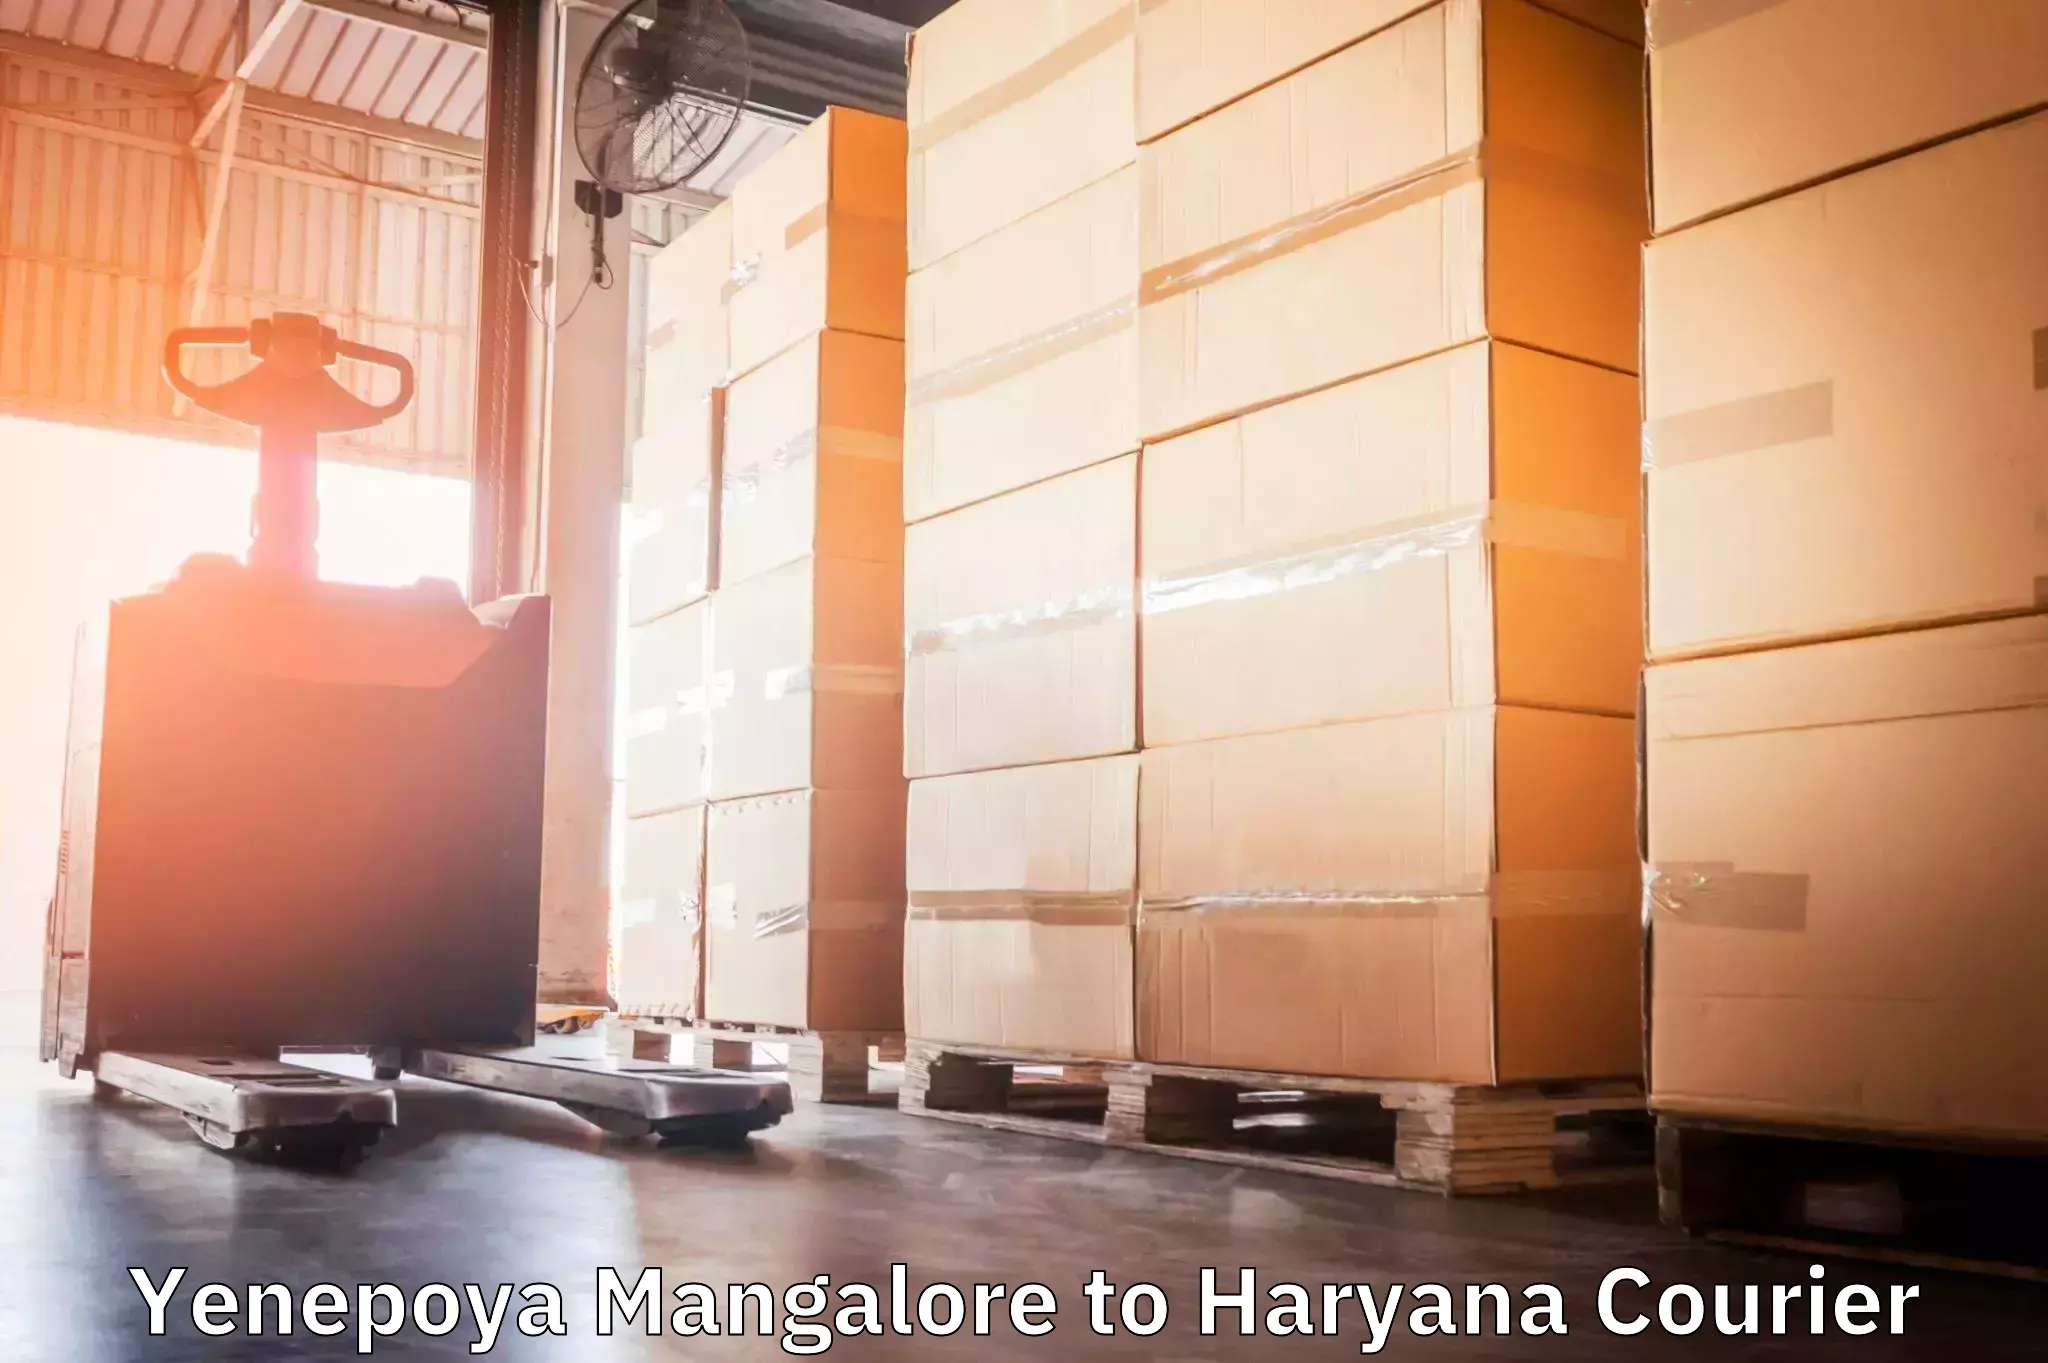 Business delivery service Yenepoya Mangalore to Haryana